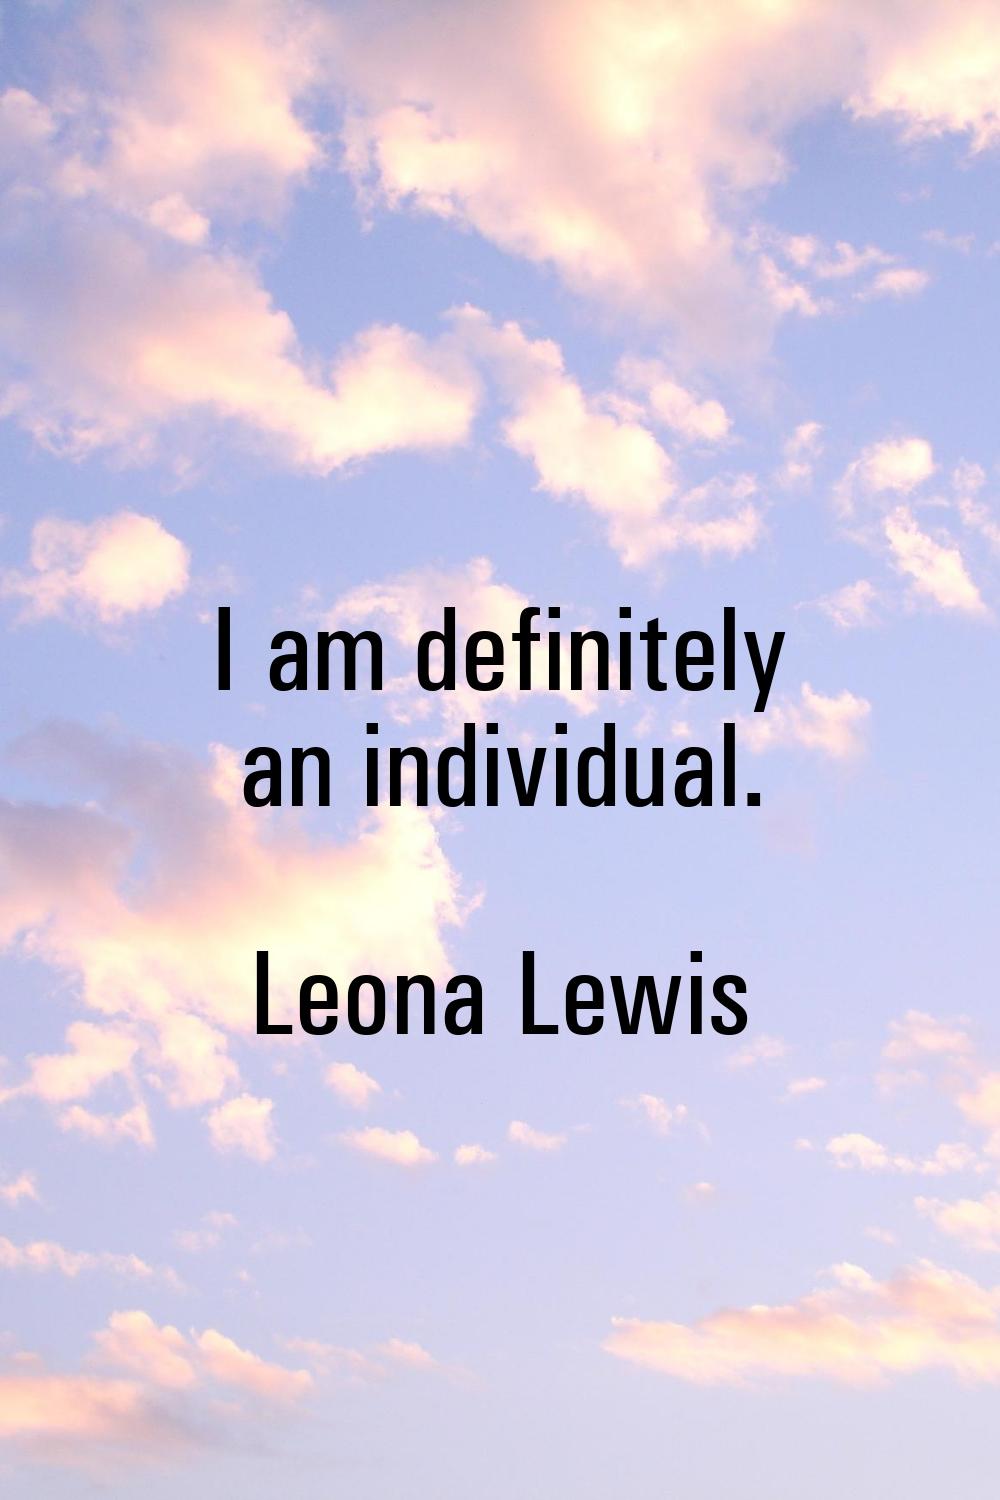 I am definitely an individual.